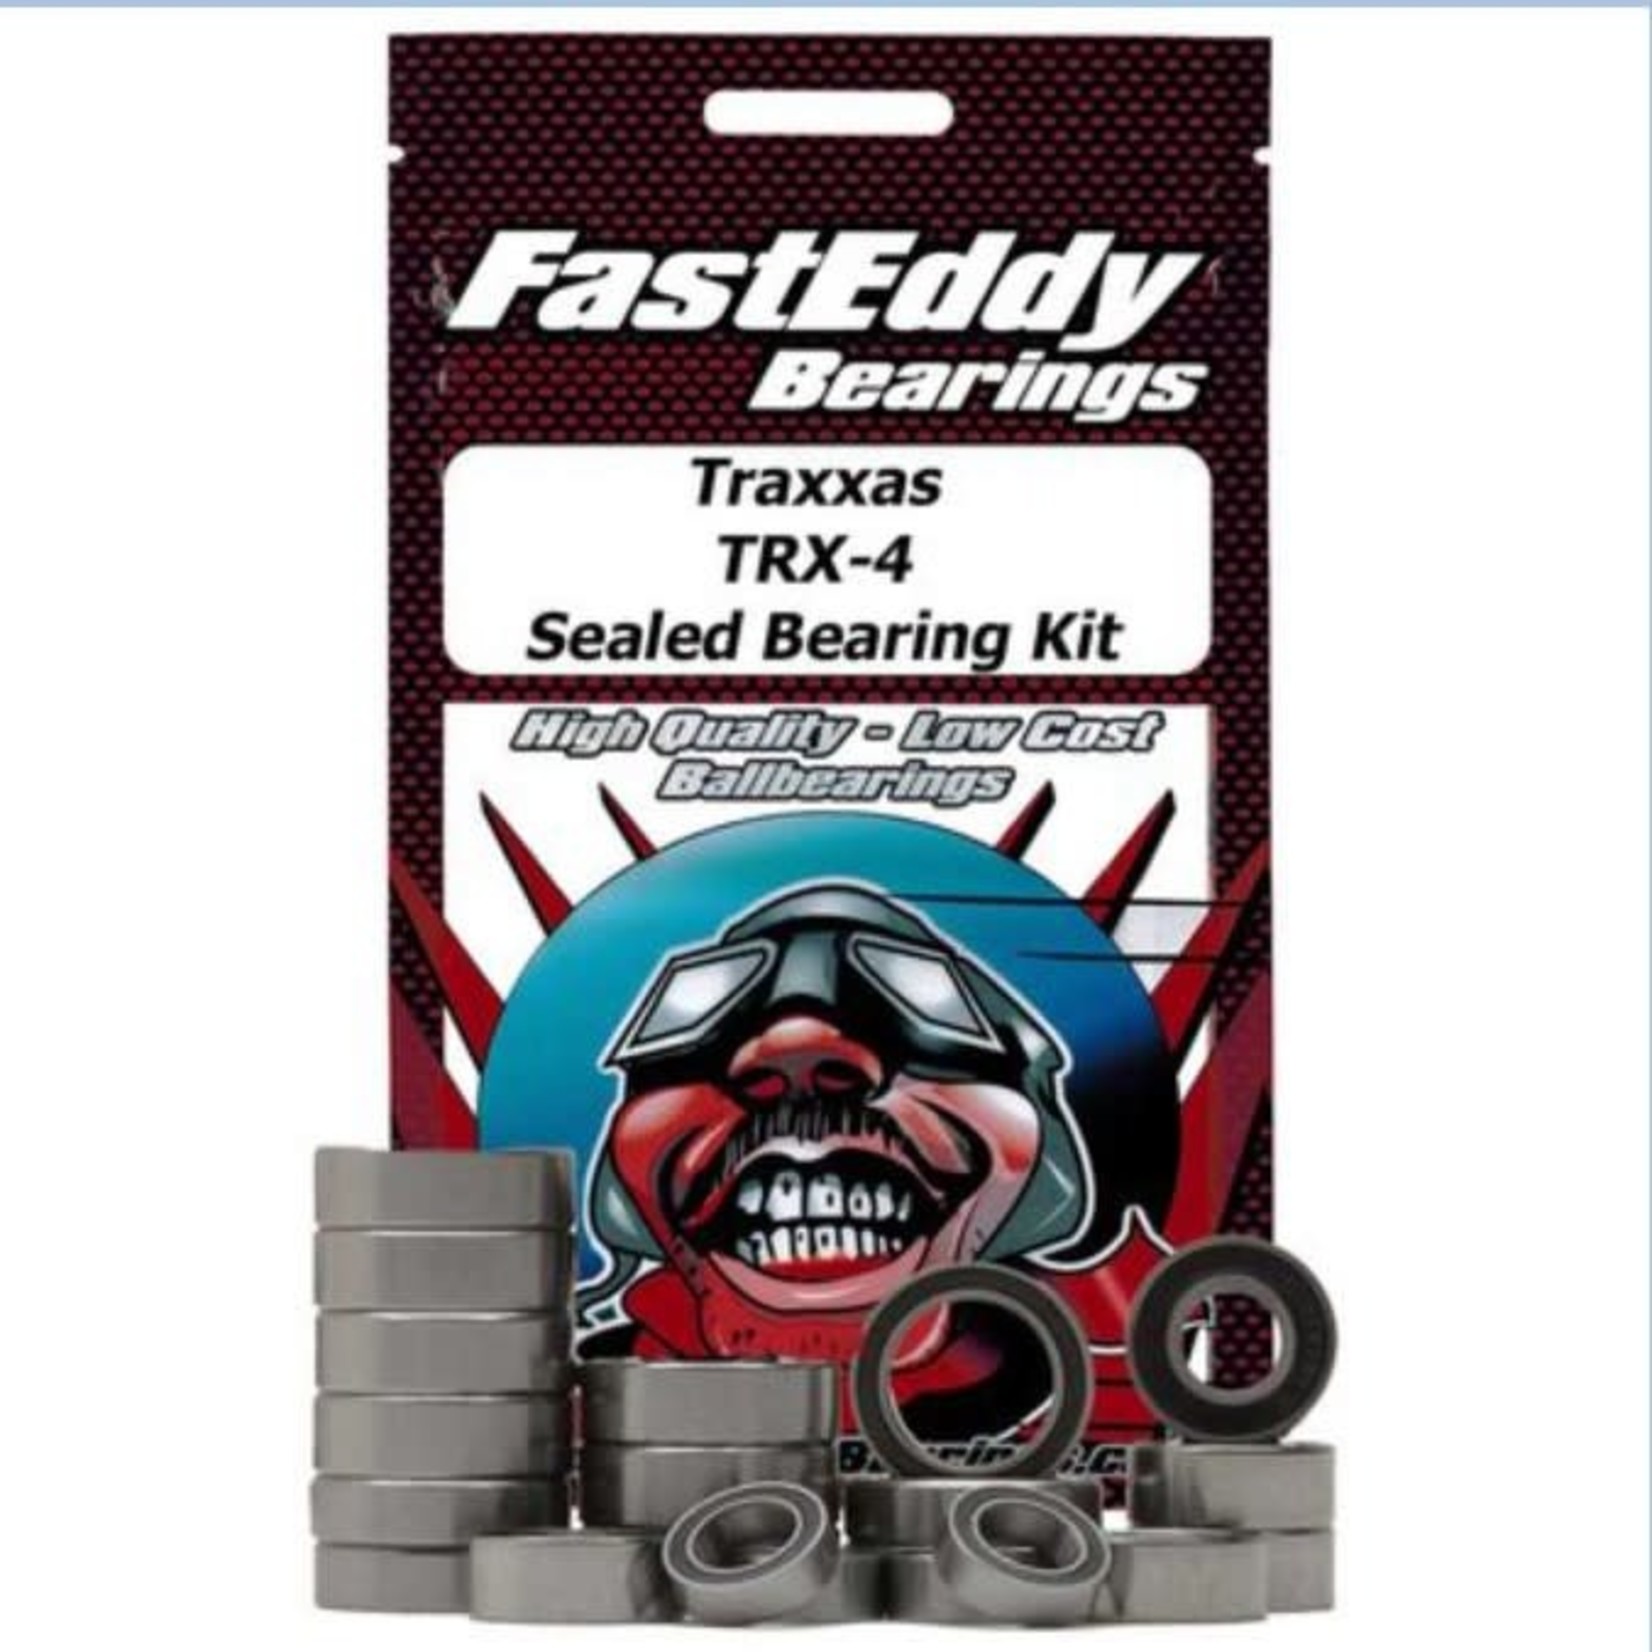 Fast Eddy Sealed Bearing Kit - Traxxas TRX-4